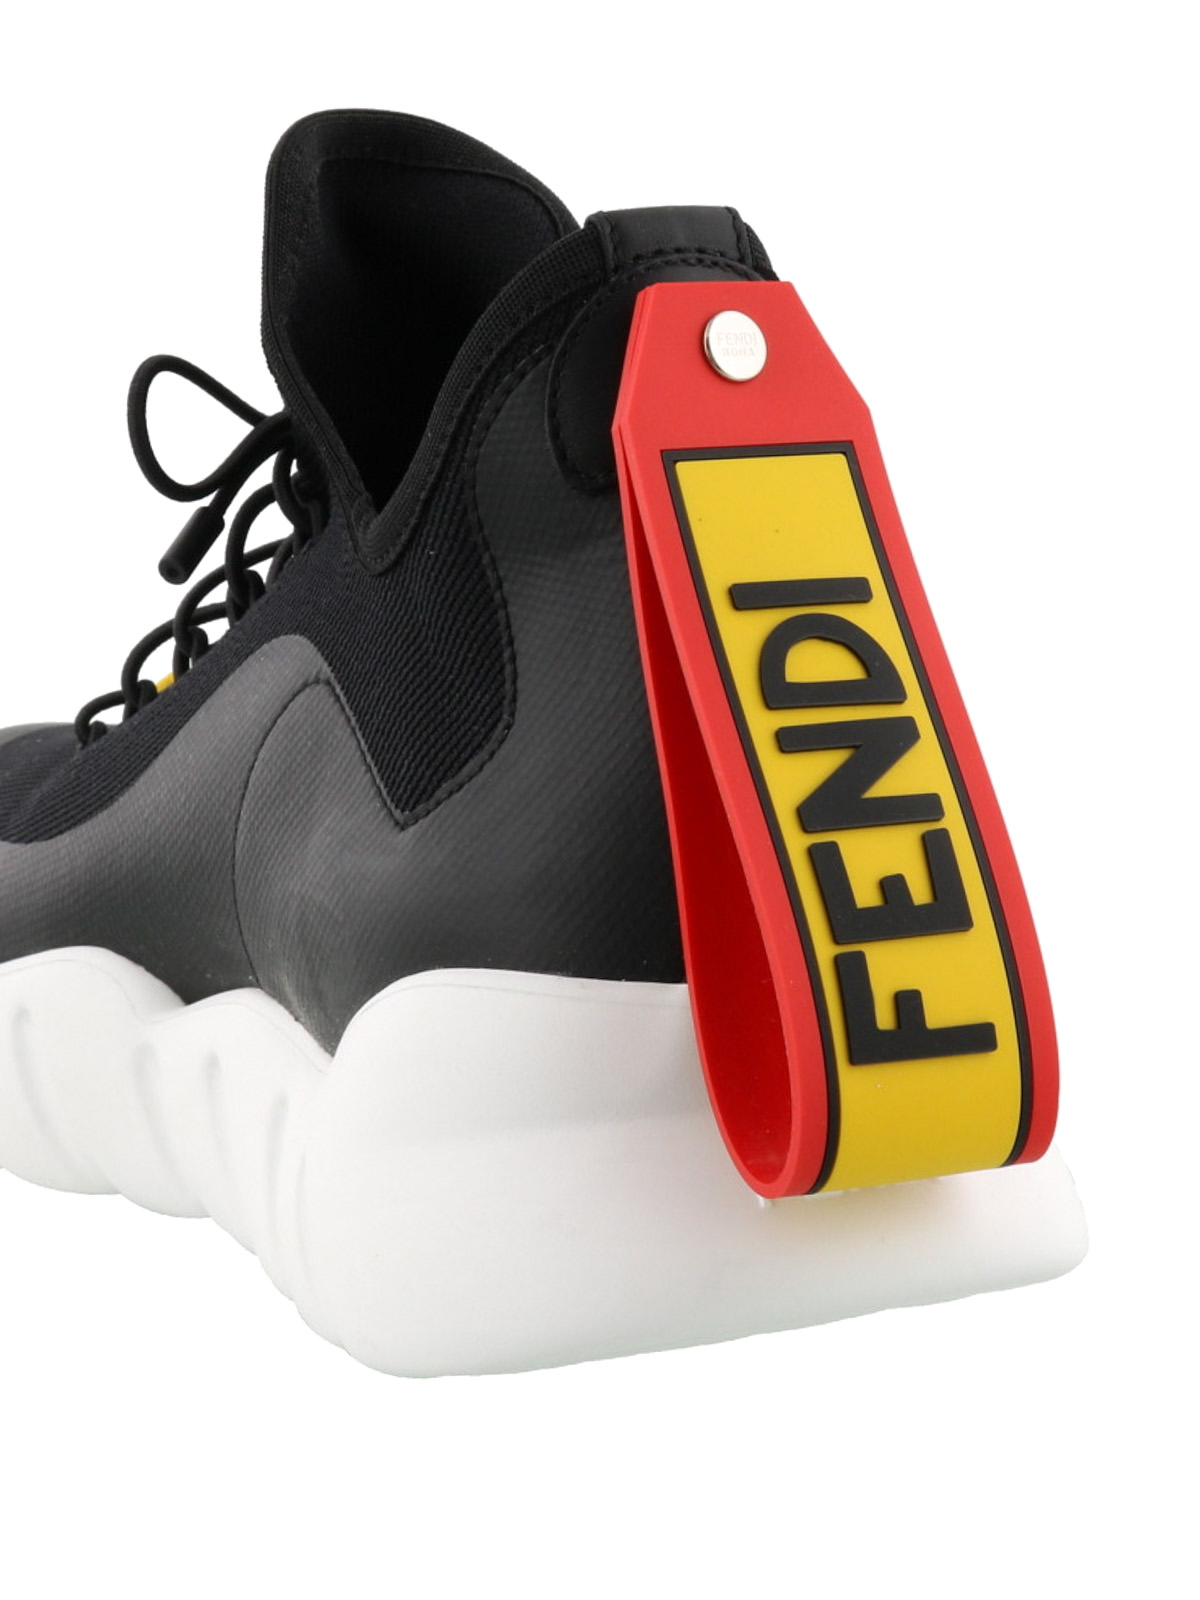 fendi think sneakers